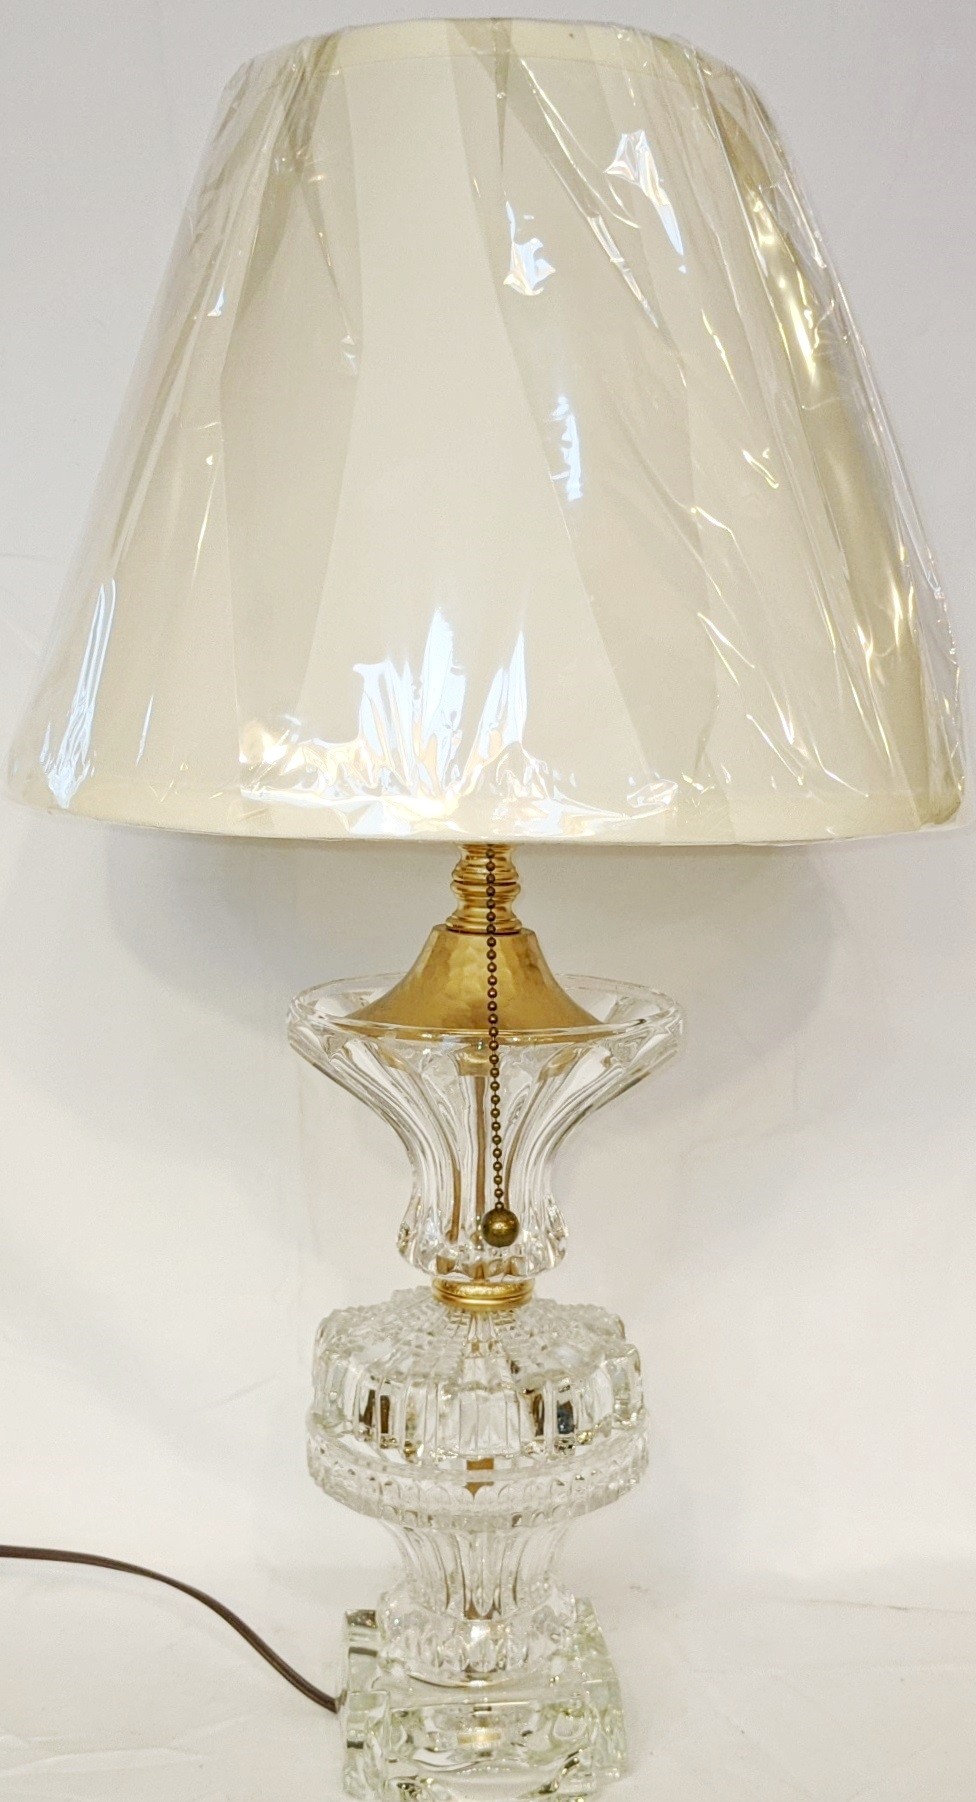 Vintage Crystal Lamp 21"H - SOLD